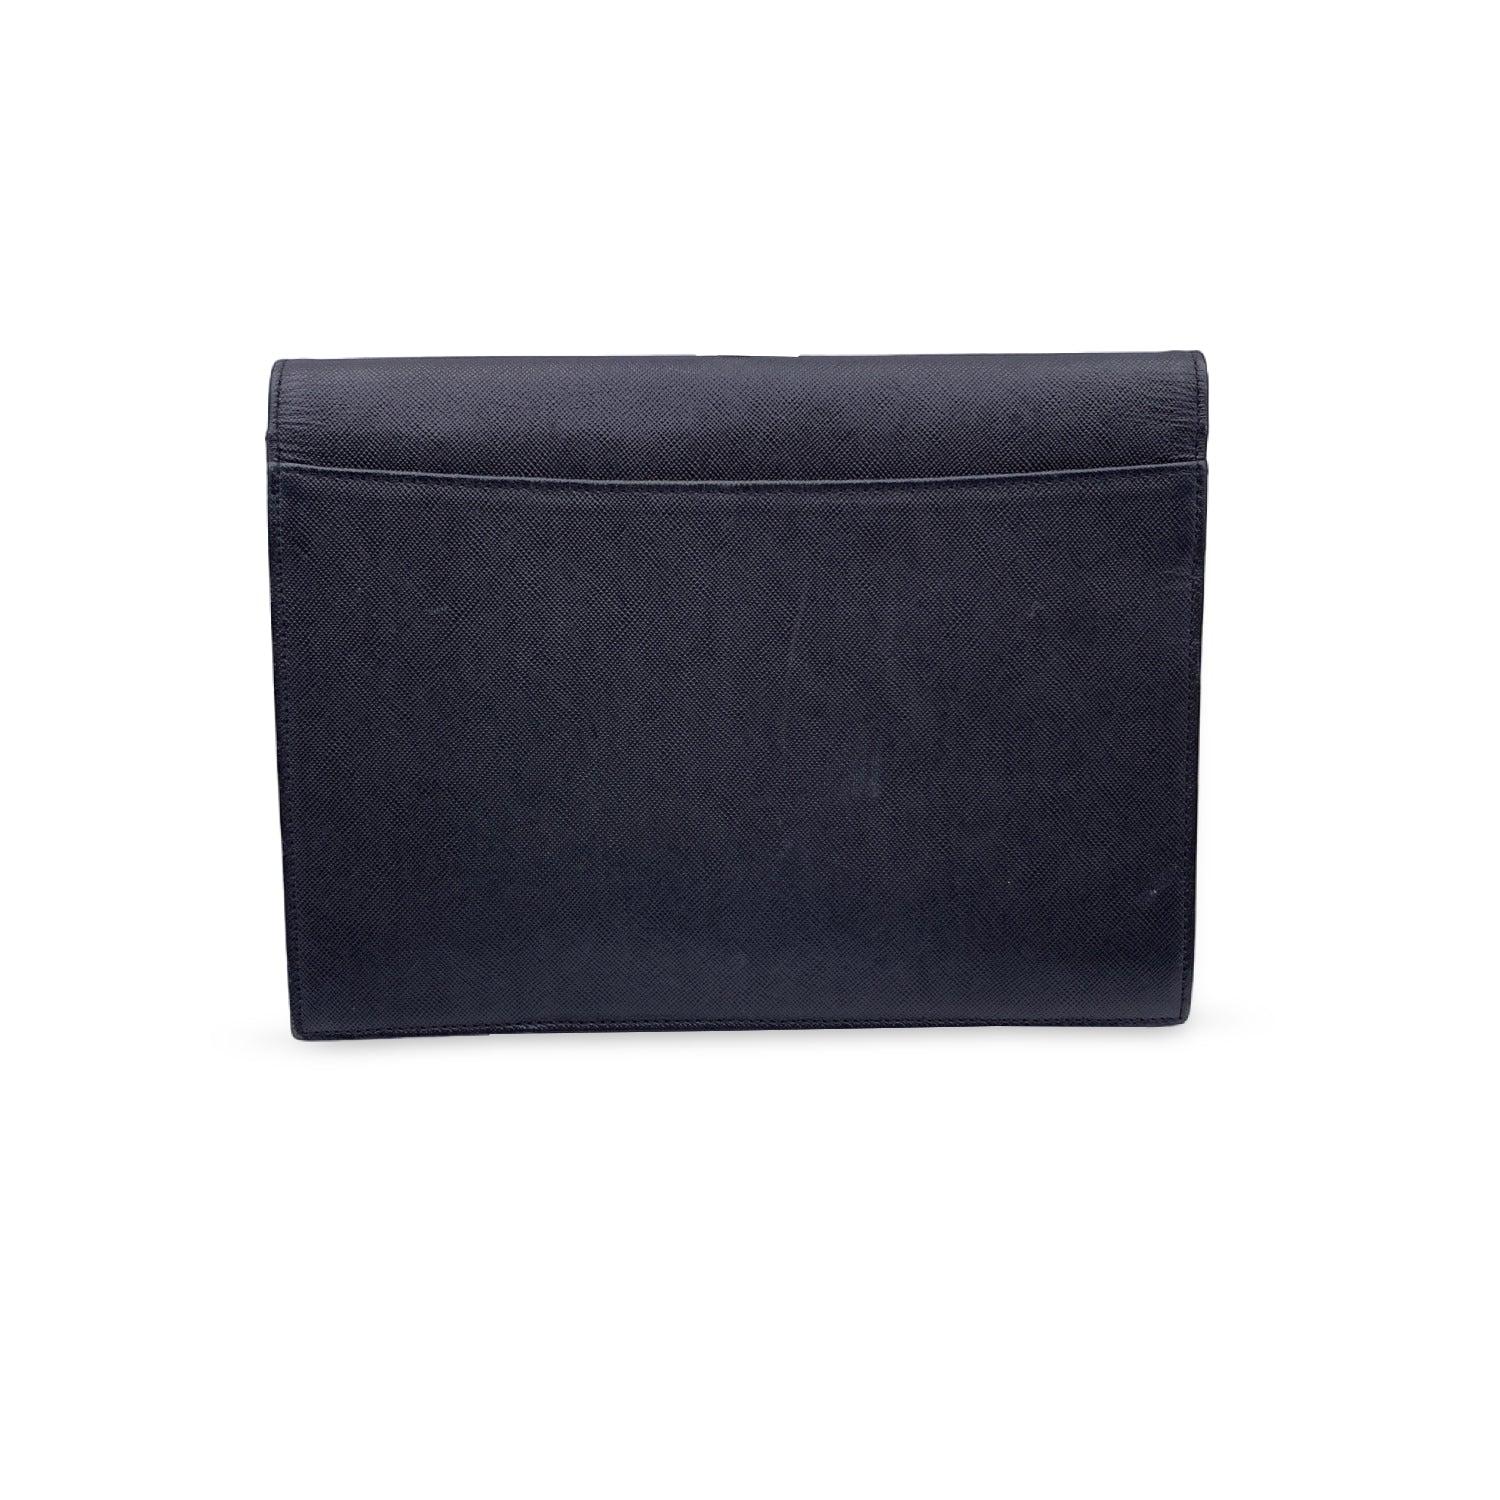 Women's or Men's Yves Saint Laurent Vintage Black Leather YSL Logo Clutch Bag For Sale